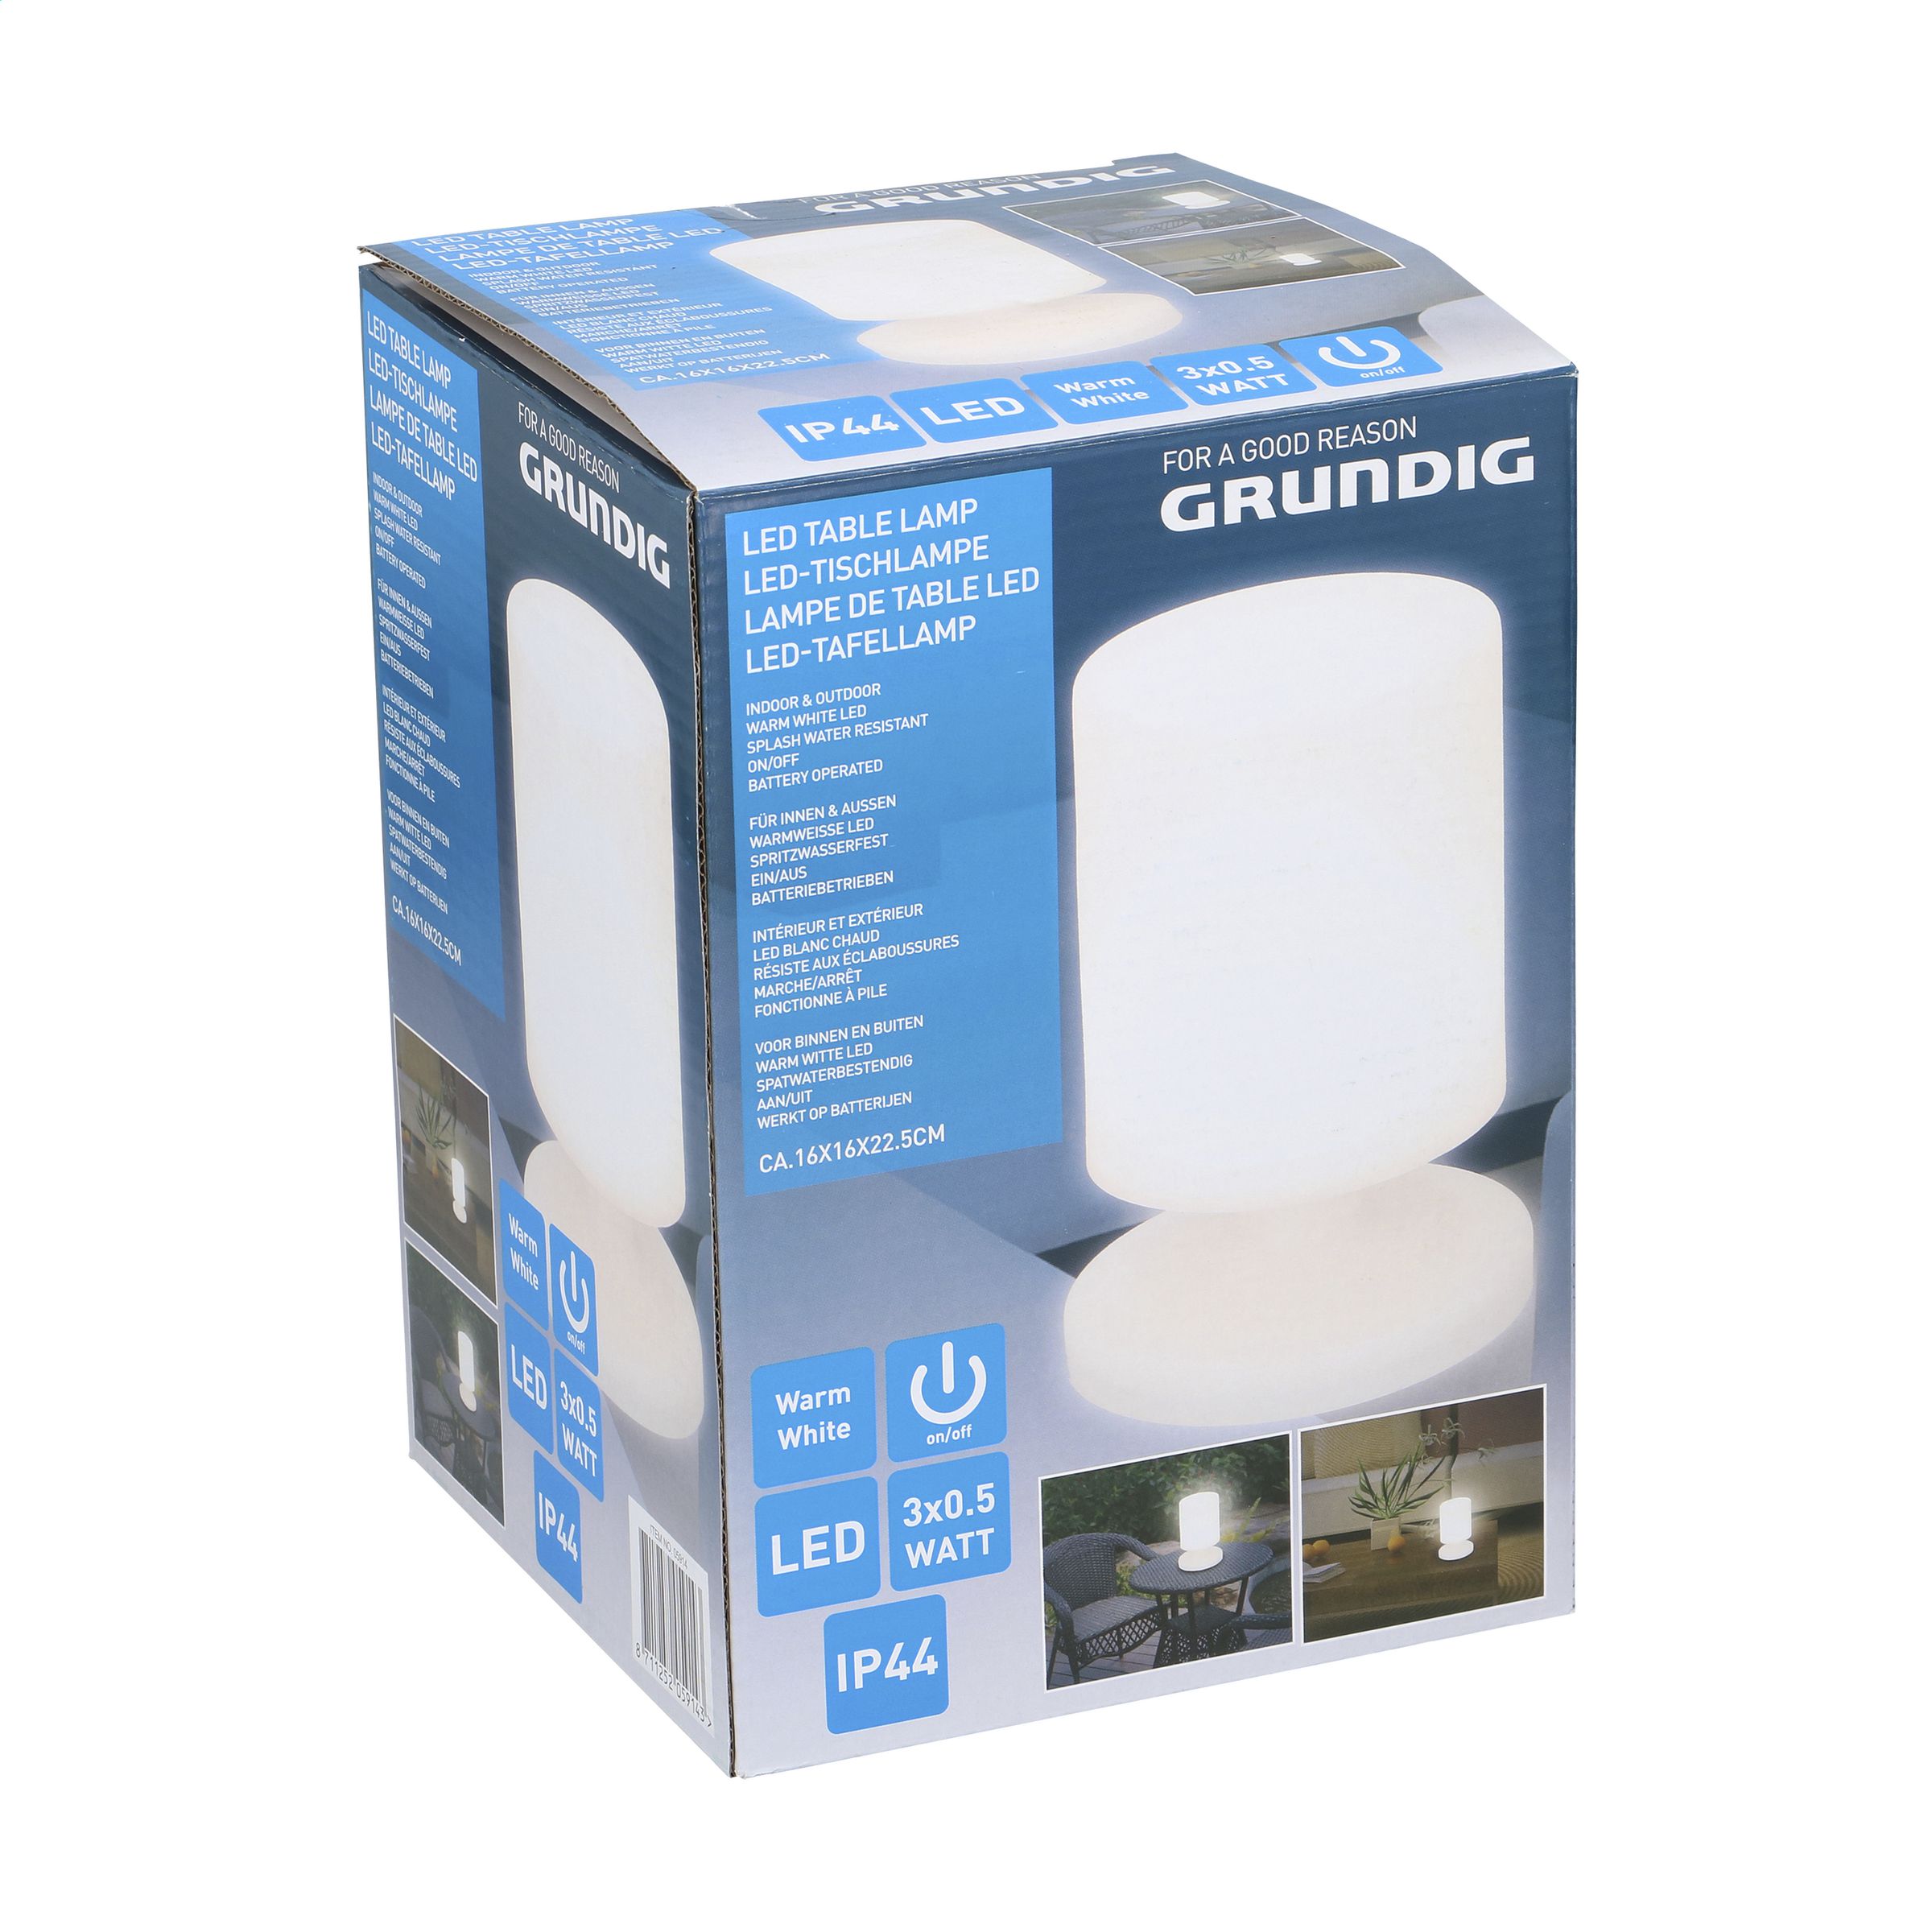 Hjem & Bolig, Grundig LED-Lampe - iKon - dit brand